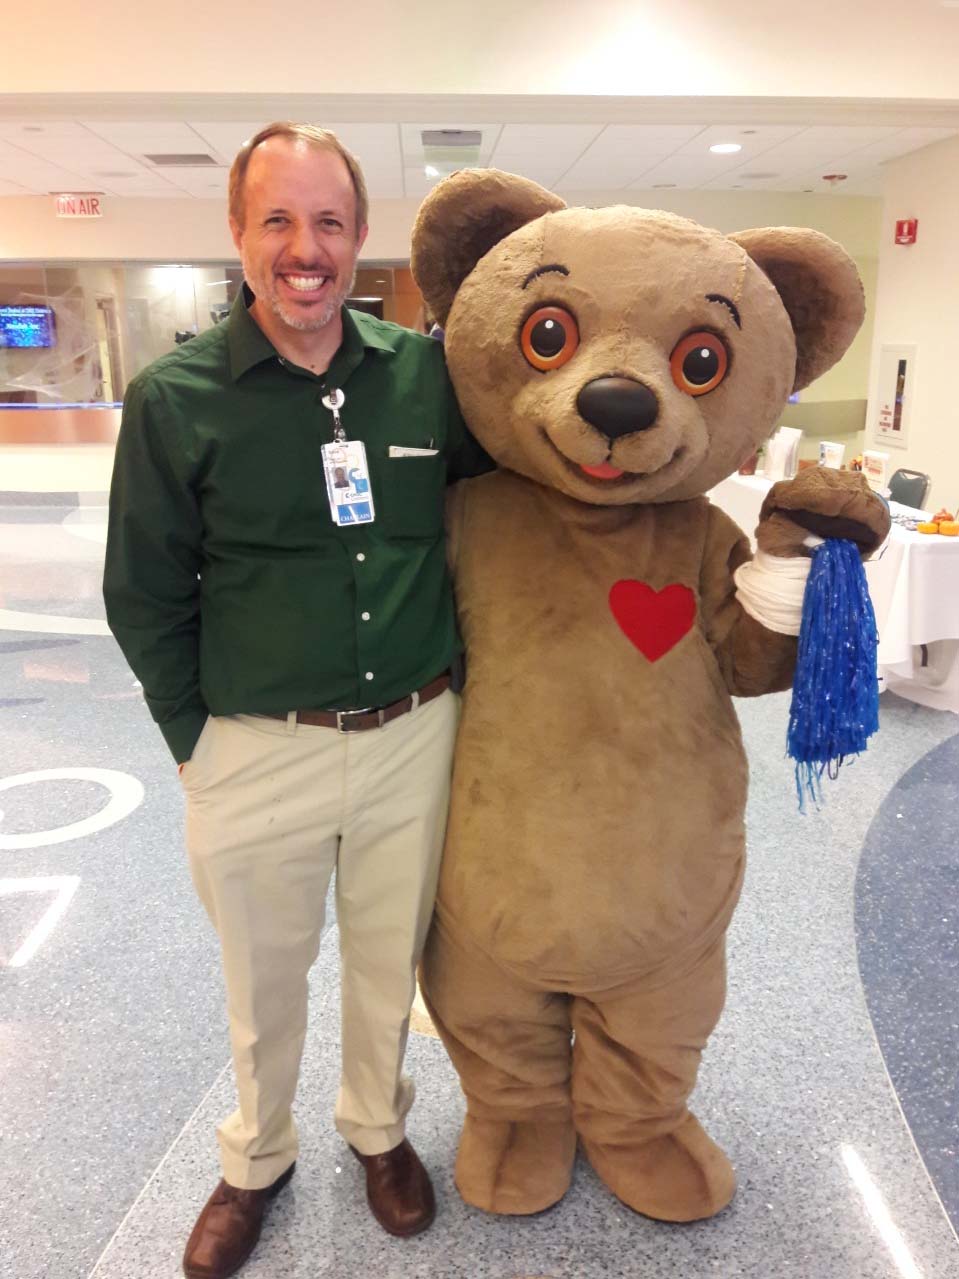 Chaplain Steve standing with Choco Bear mascot in CHOC hospital